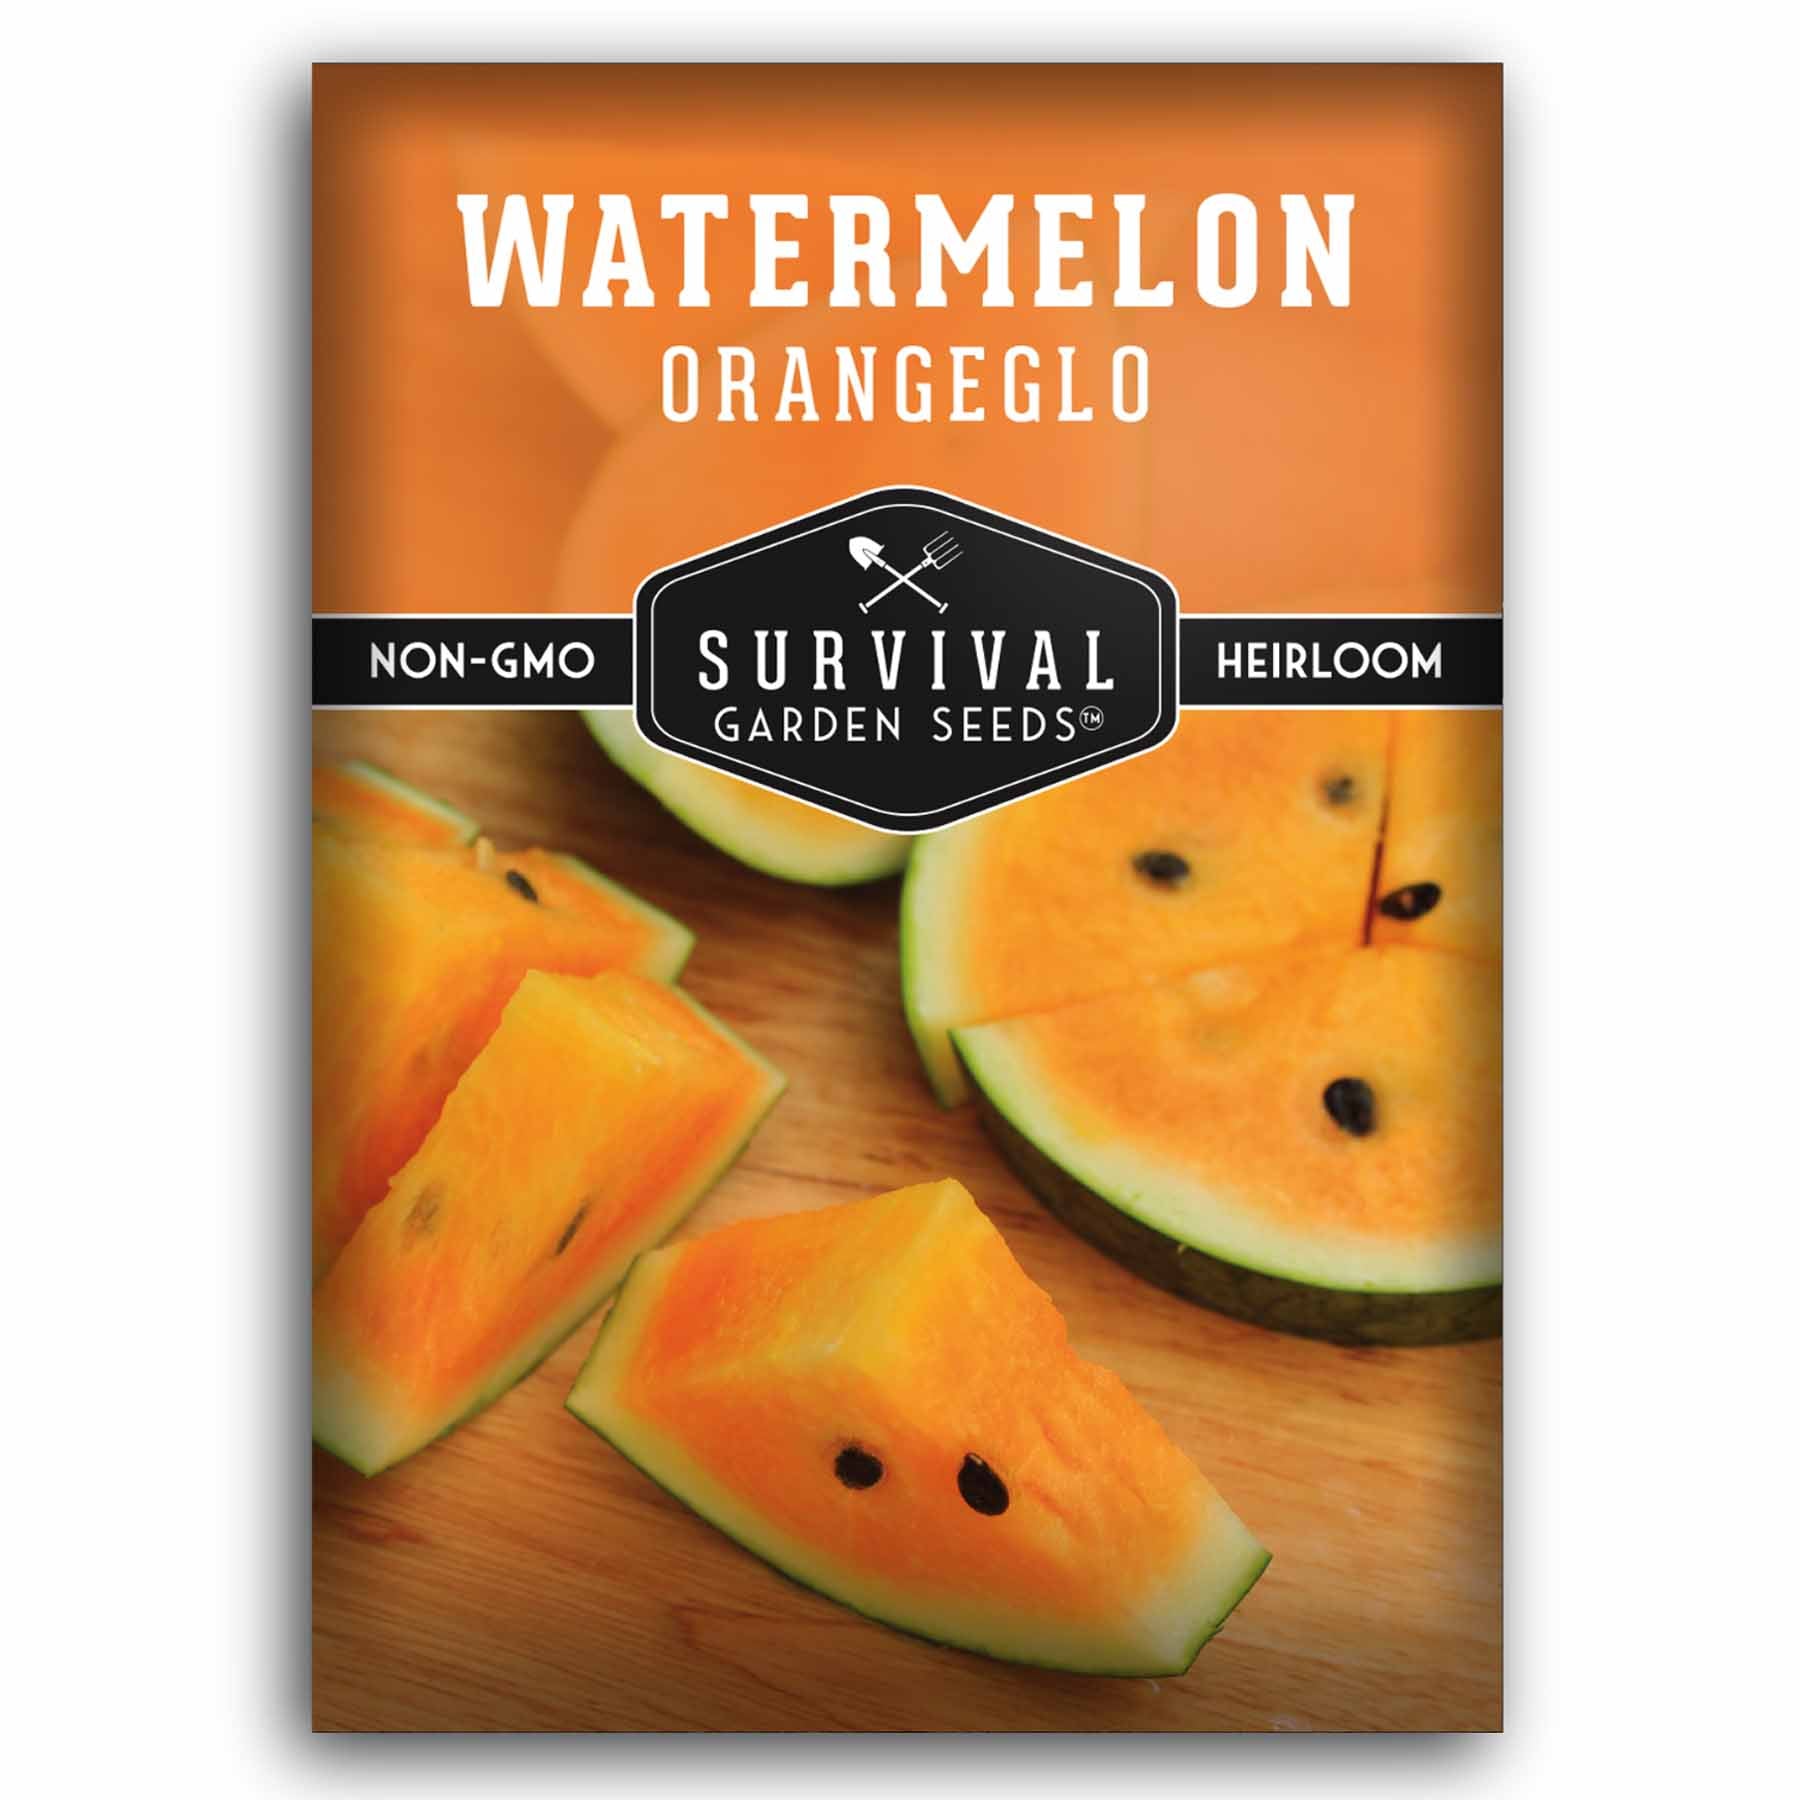 1 Packet of Orangeglo Watermelon Seeds